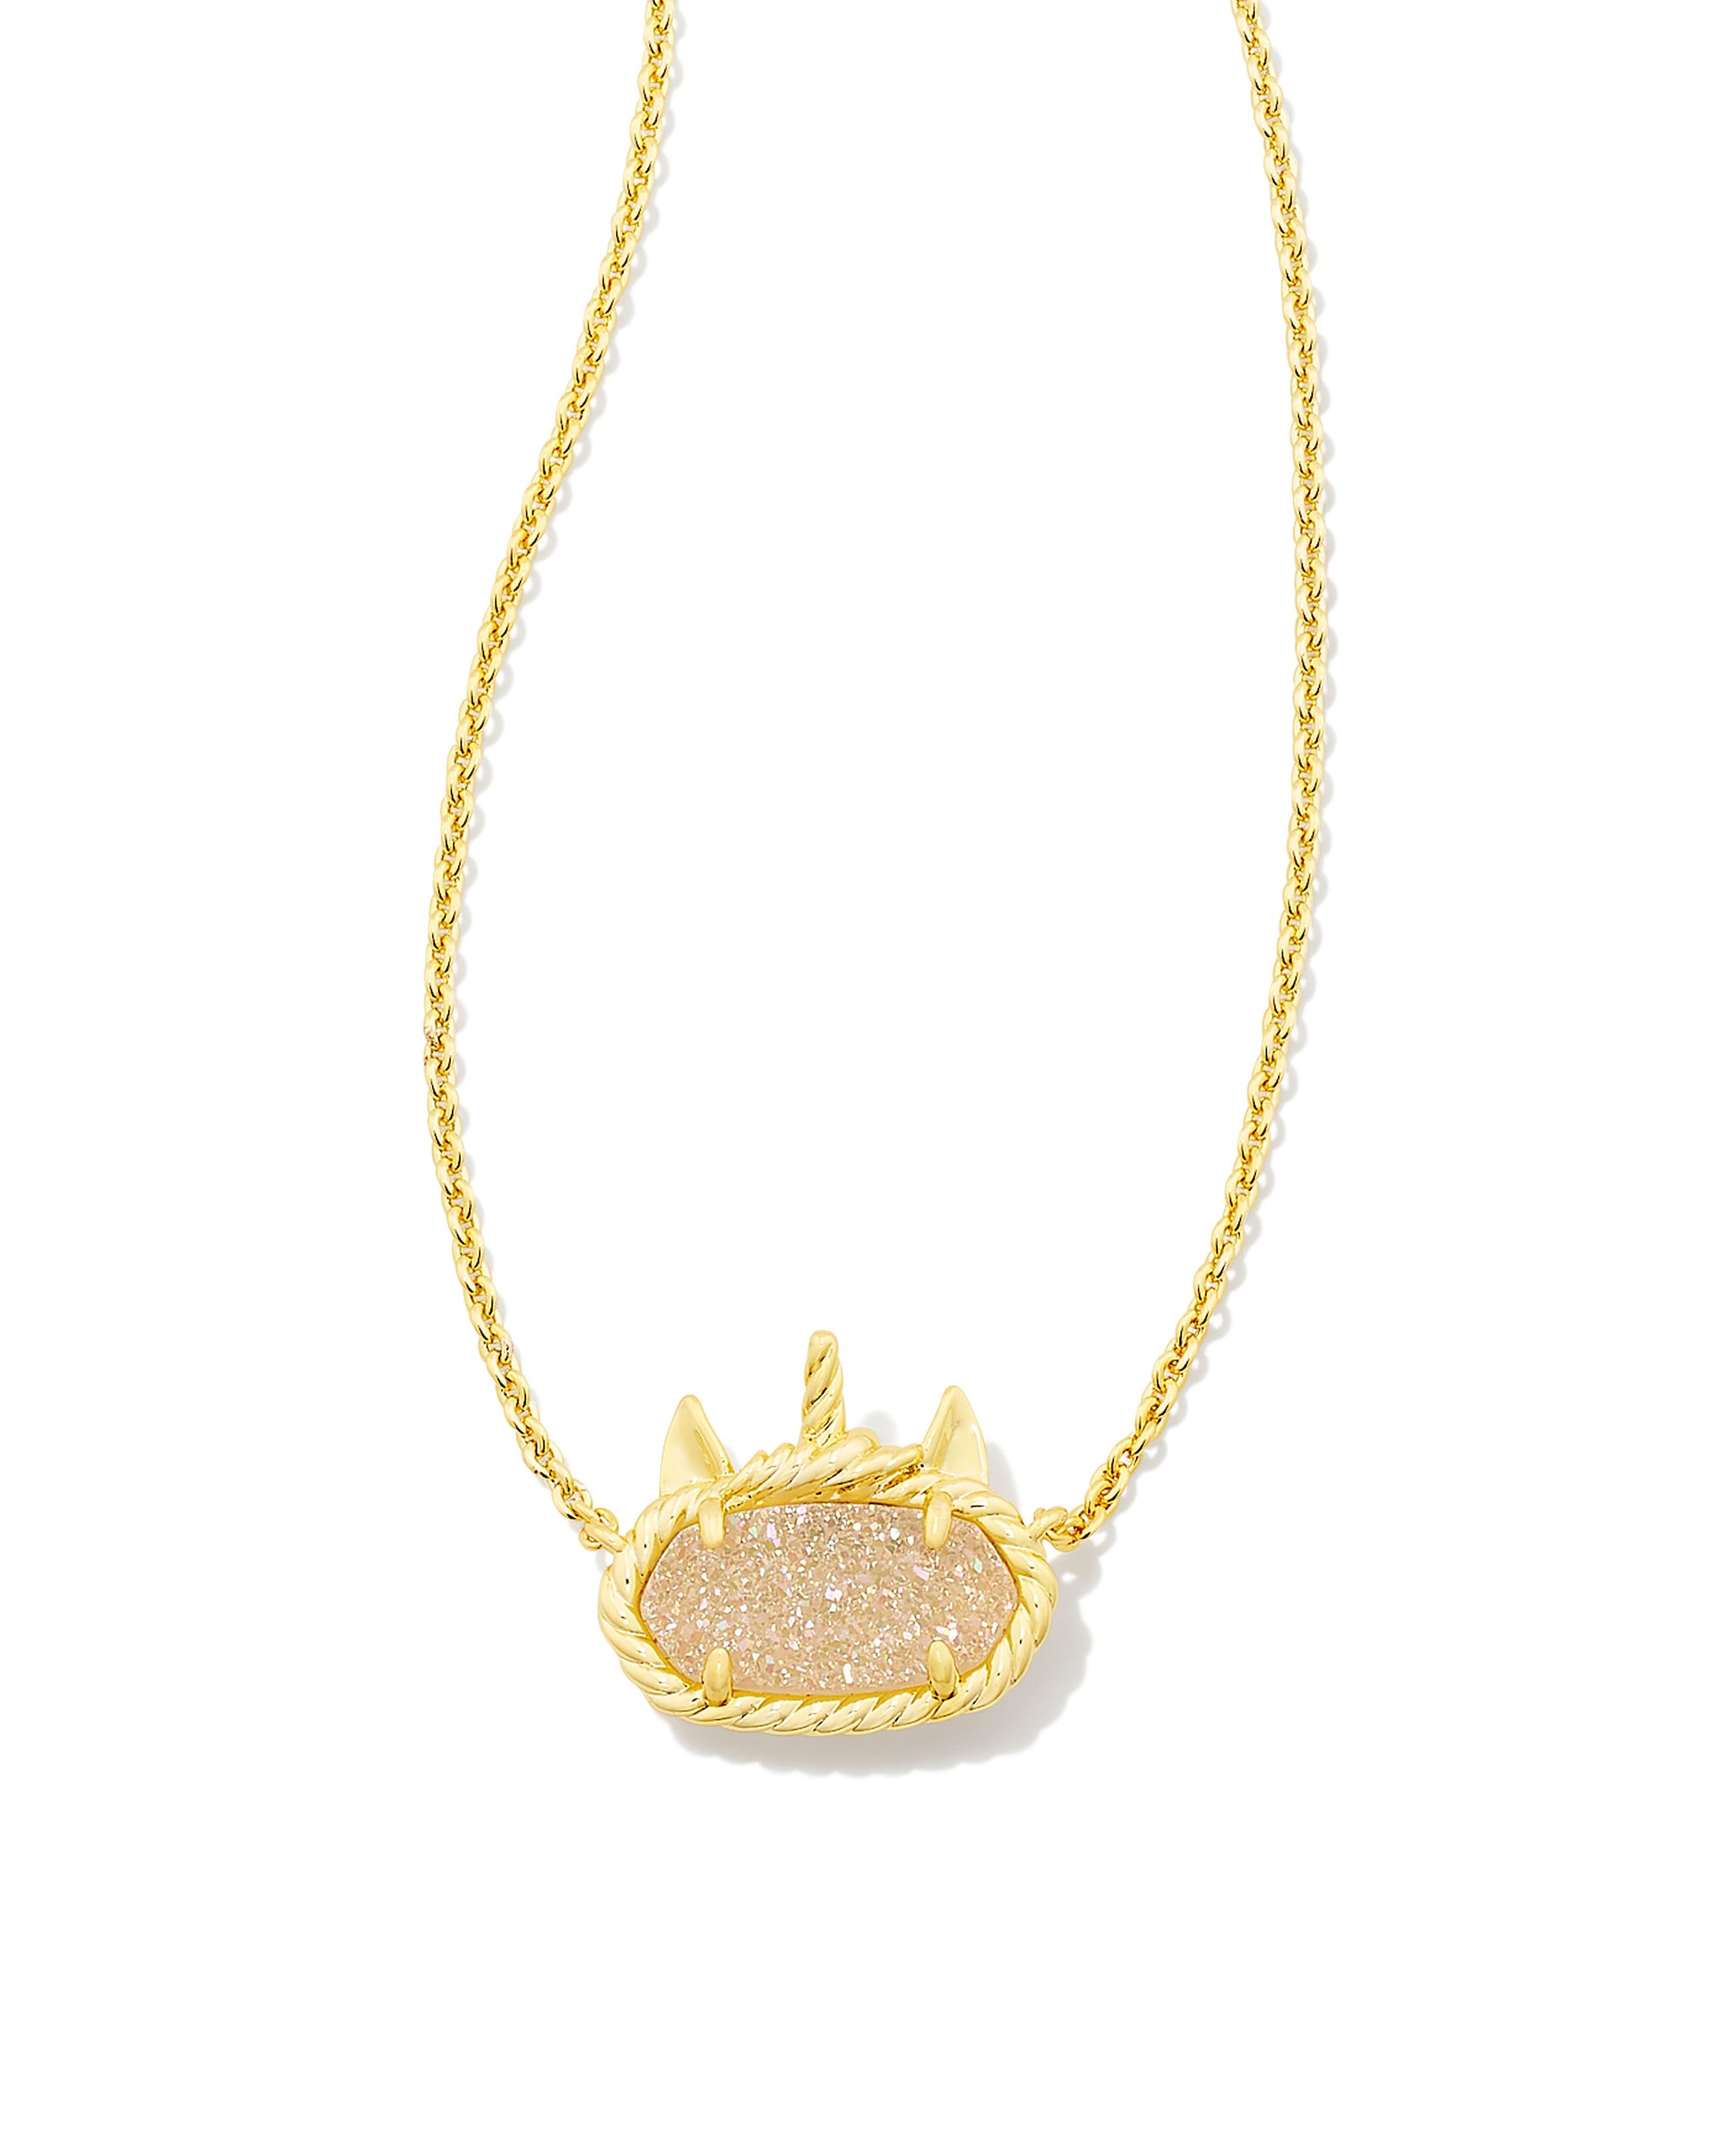 Elisa Unicorn Gold Short Pendant Necklace in Iridescent Drusy